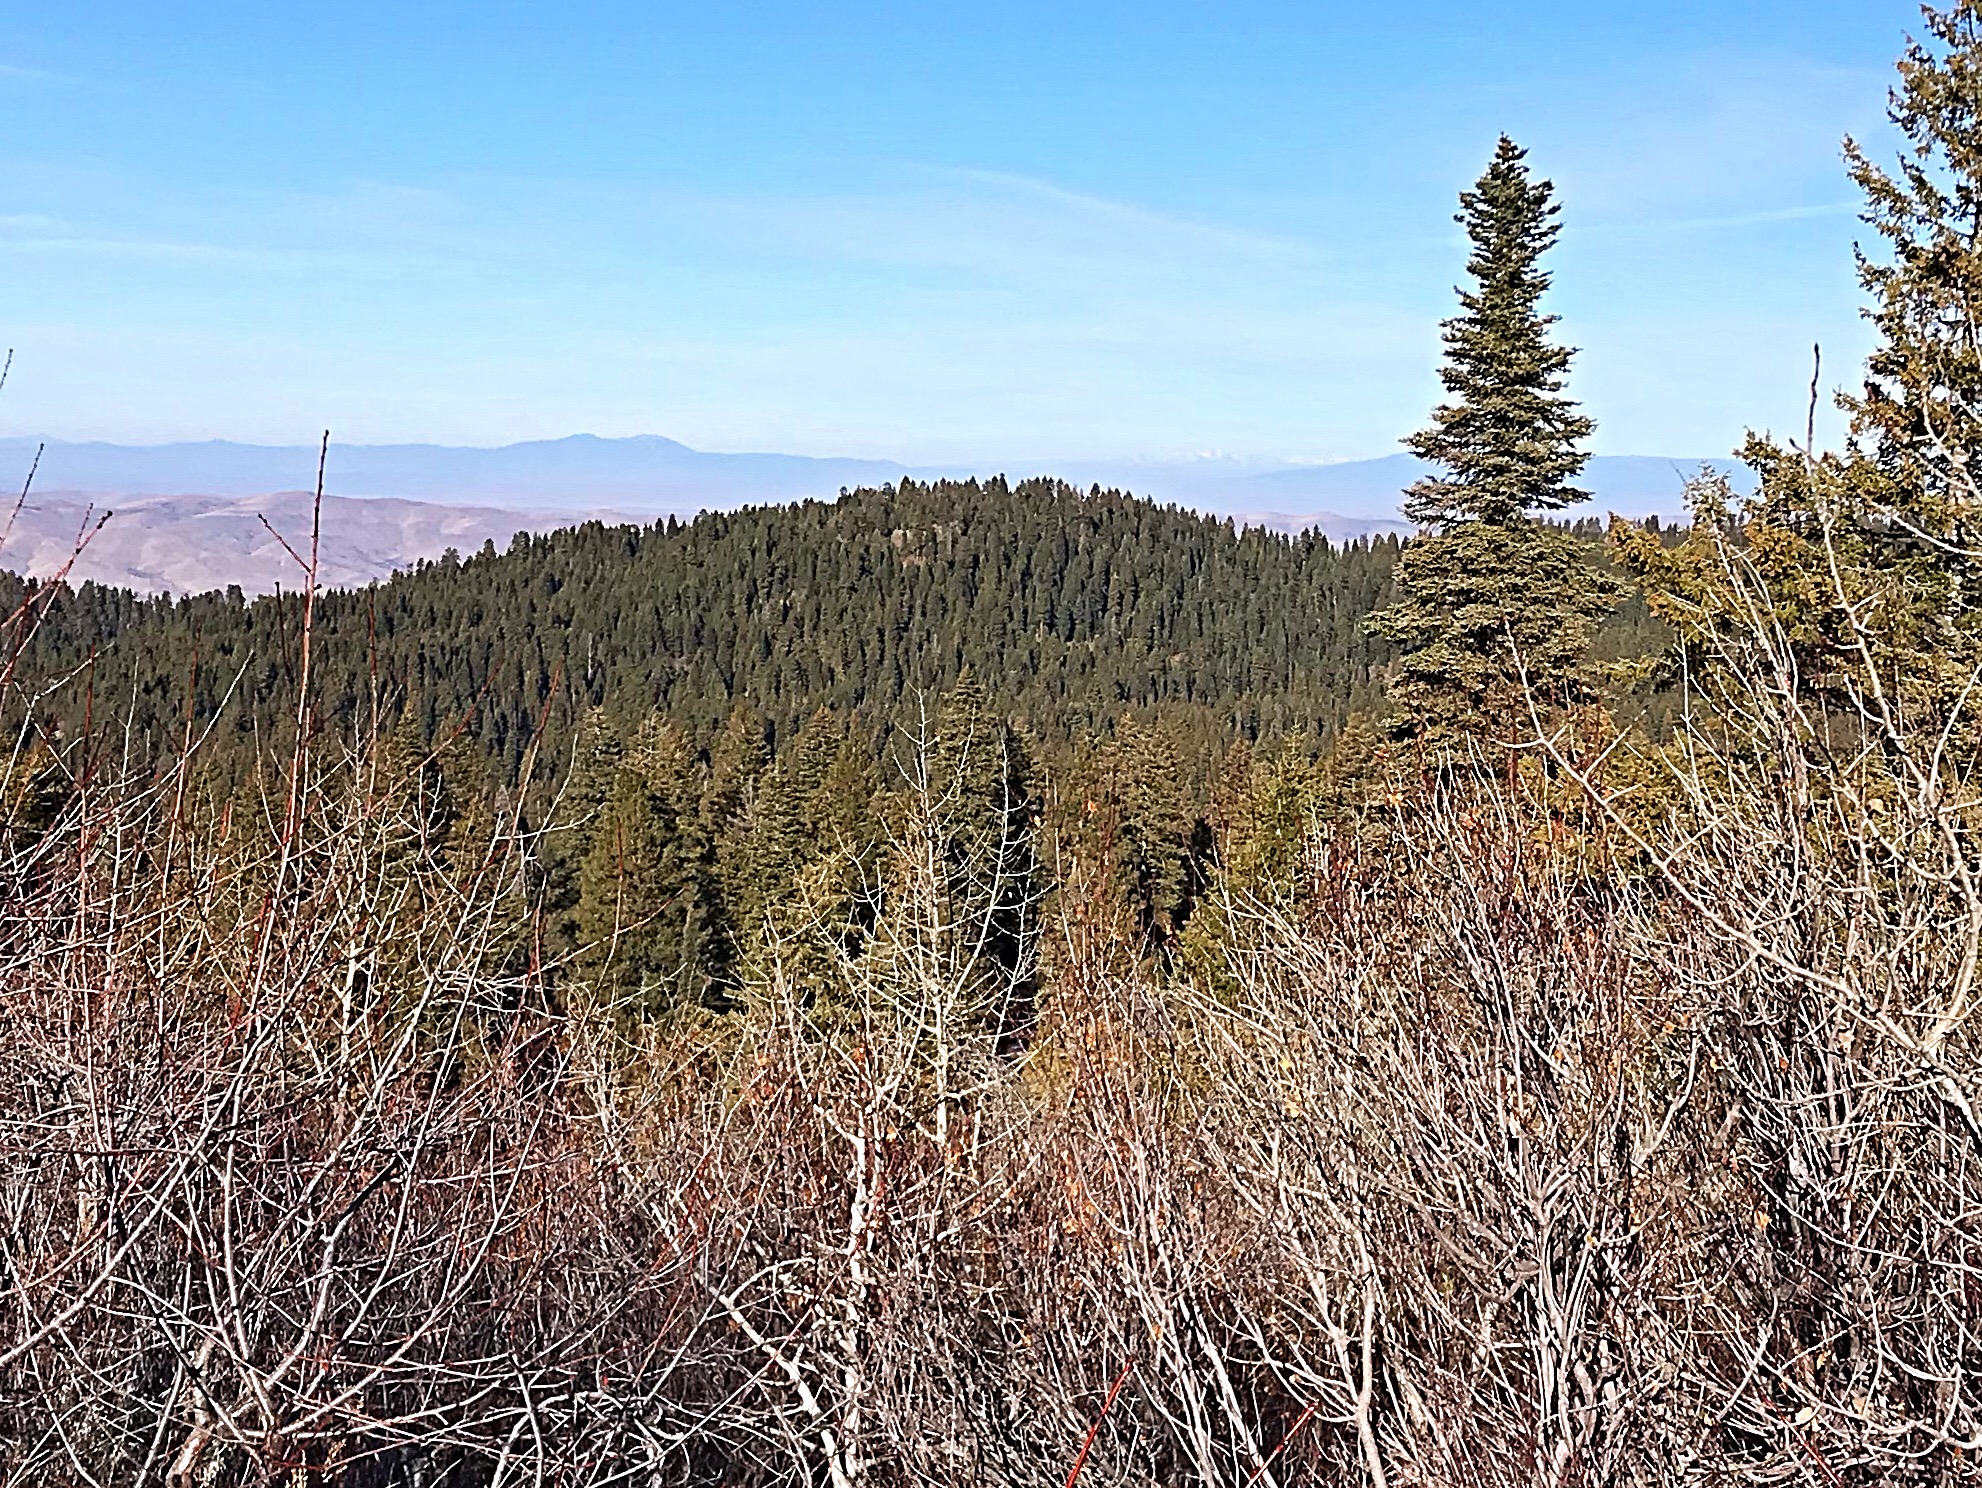 Peak 6323 viewed from Dry Buck Mountain.